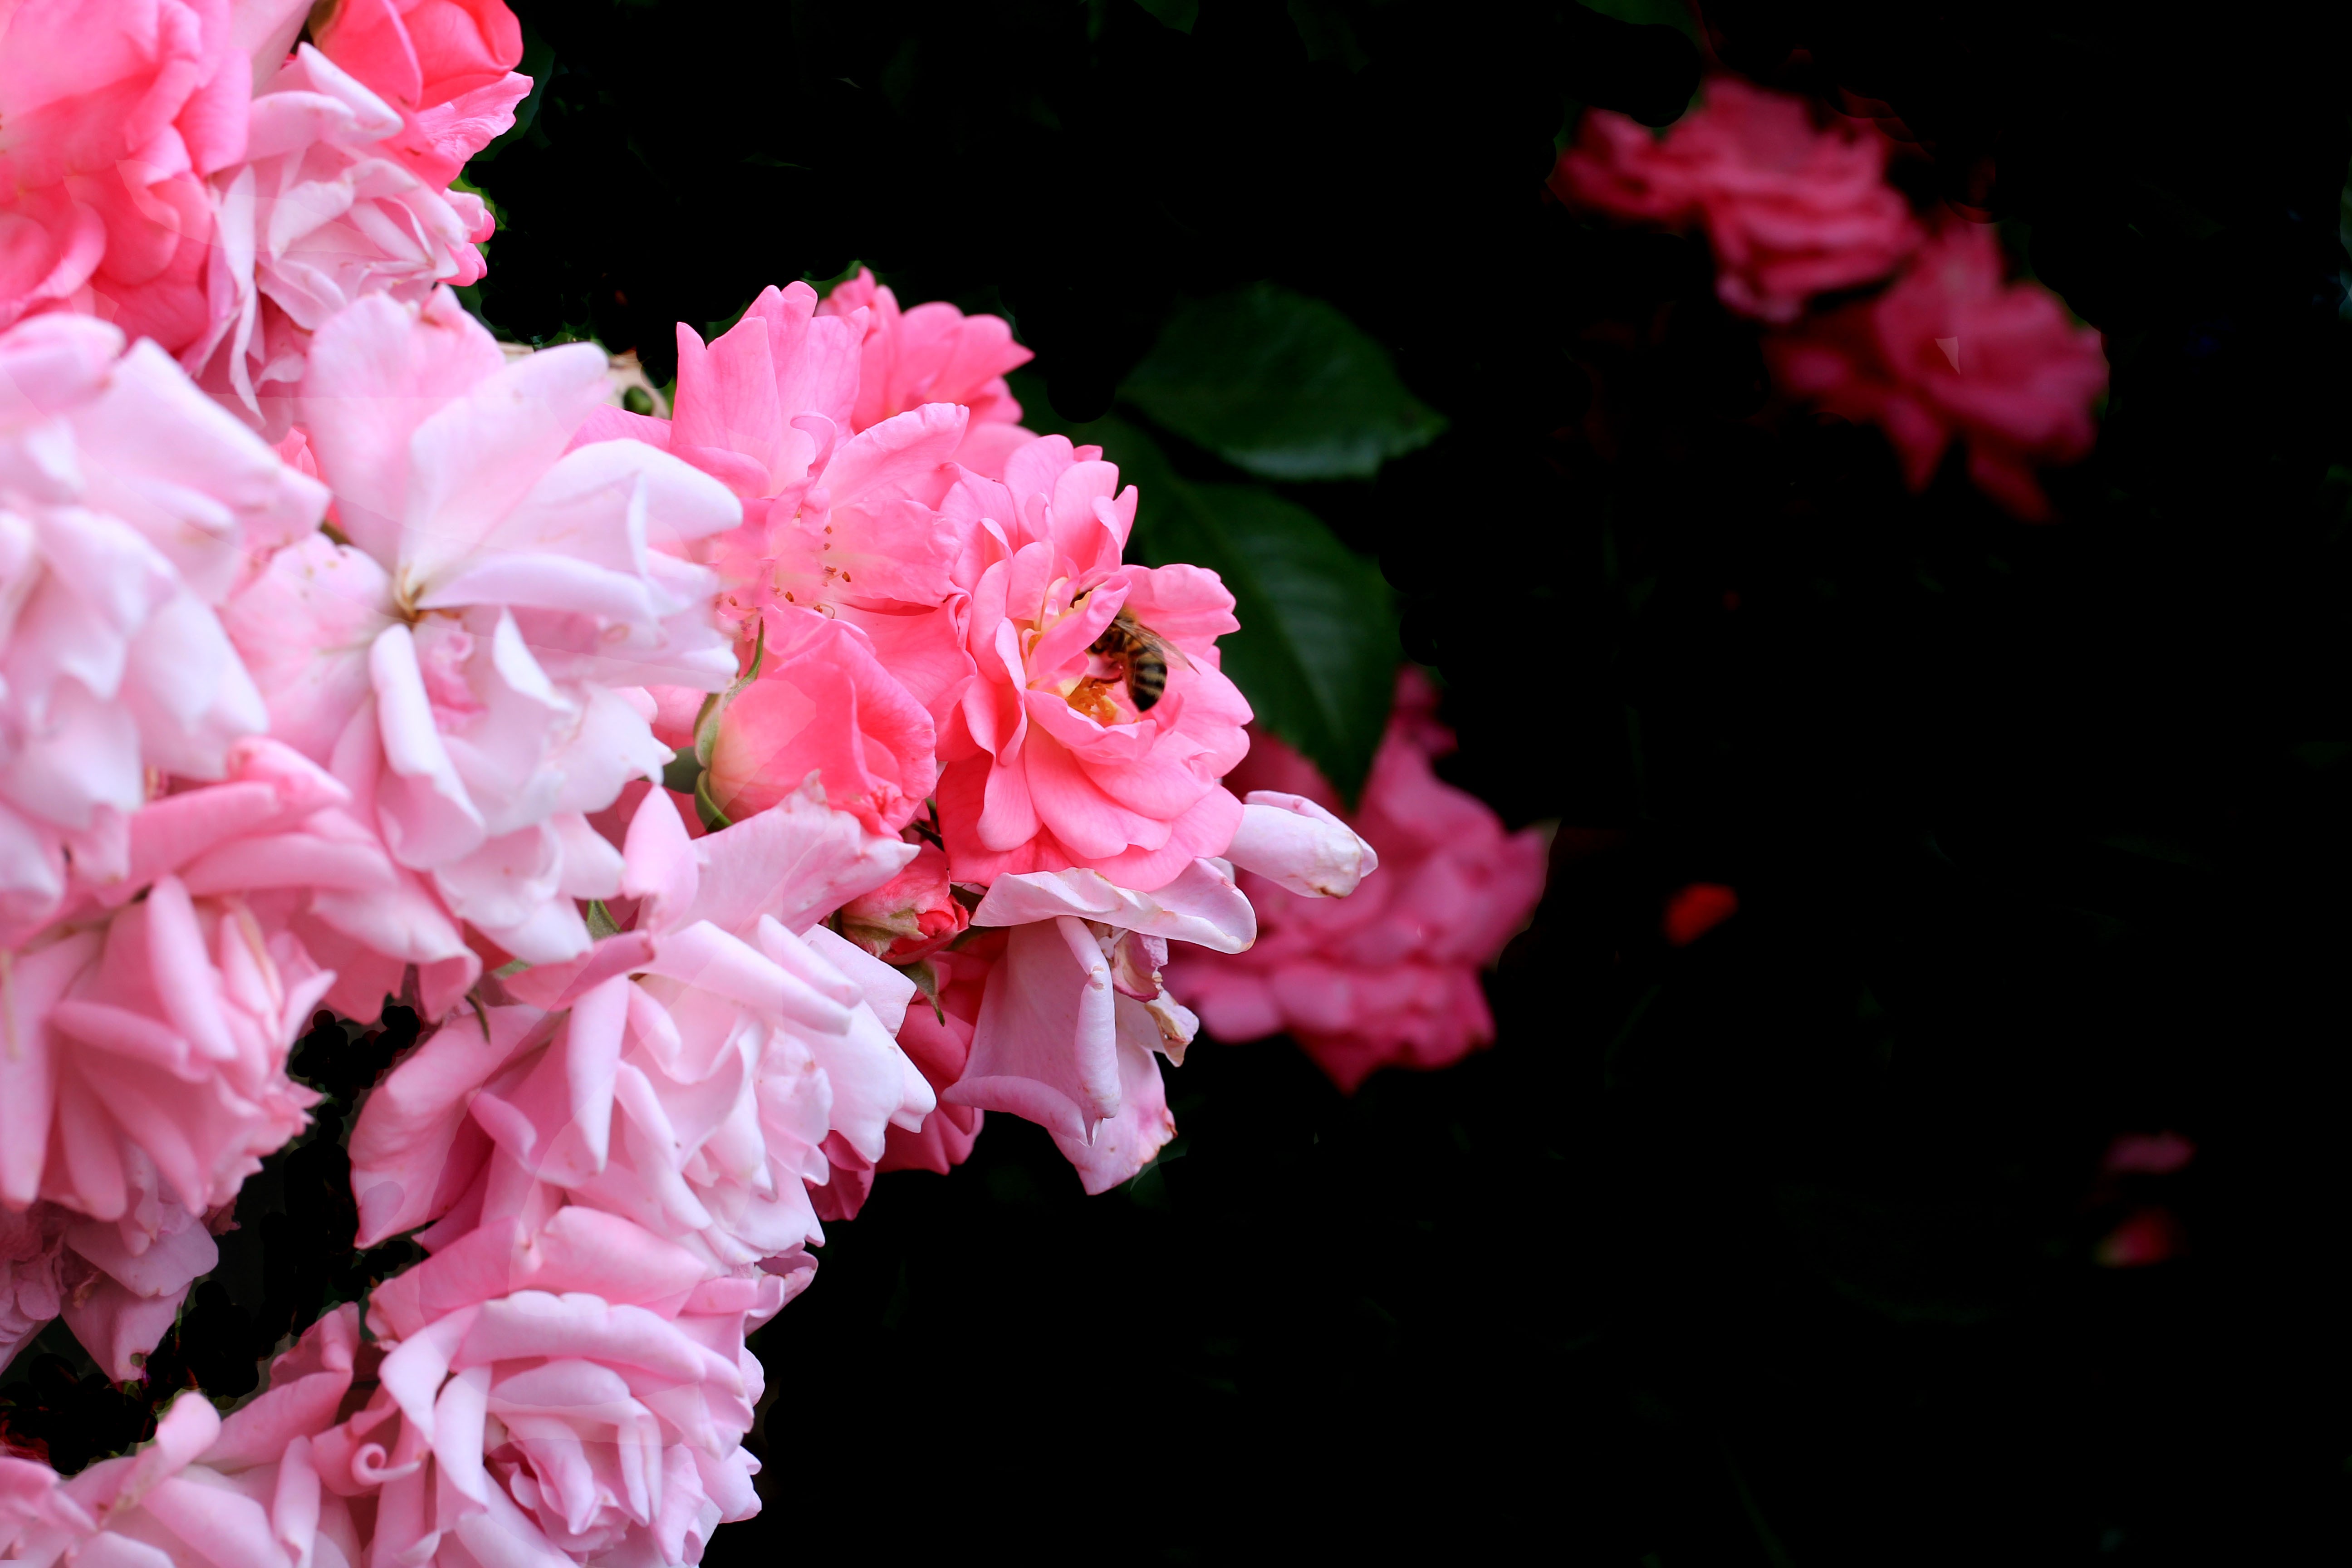 Pink Flowers Macro and Bee